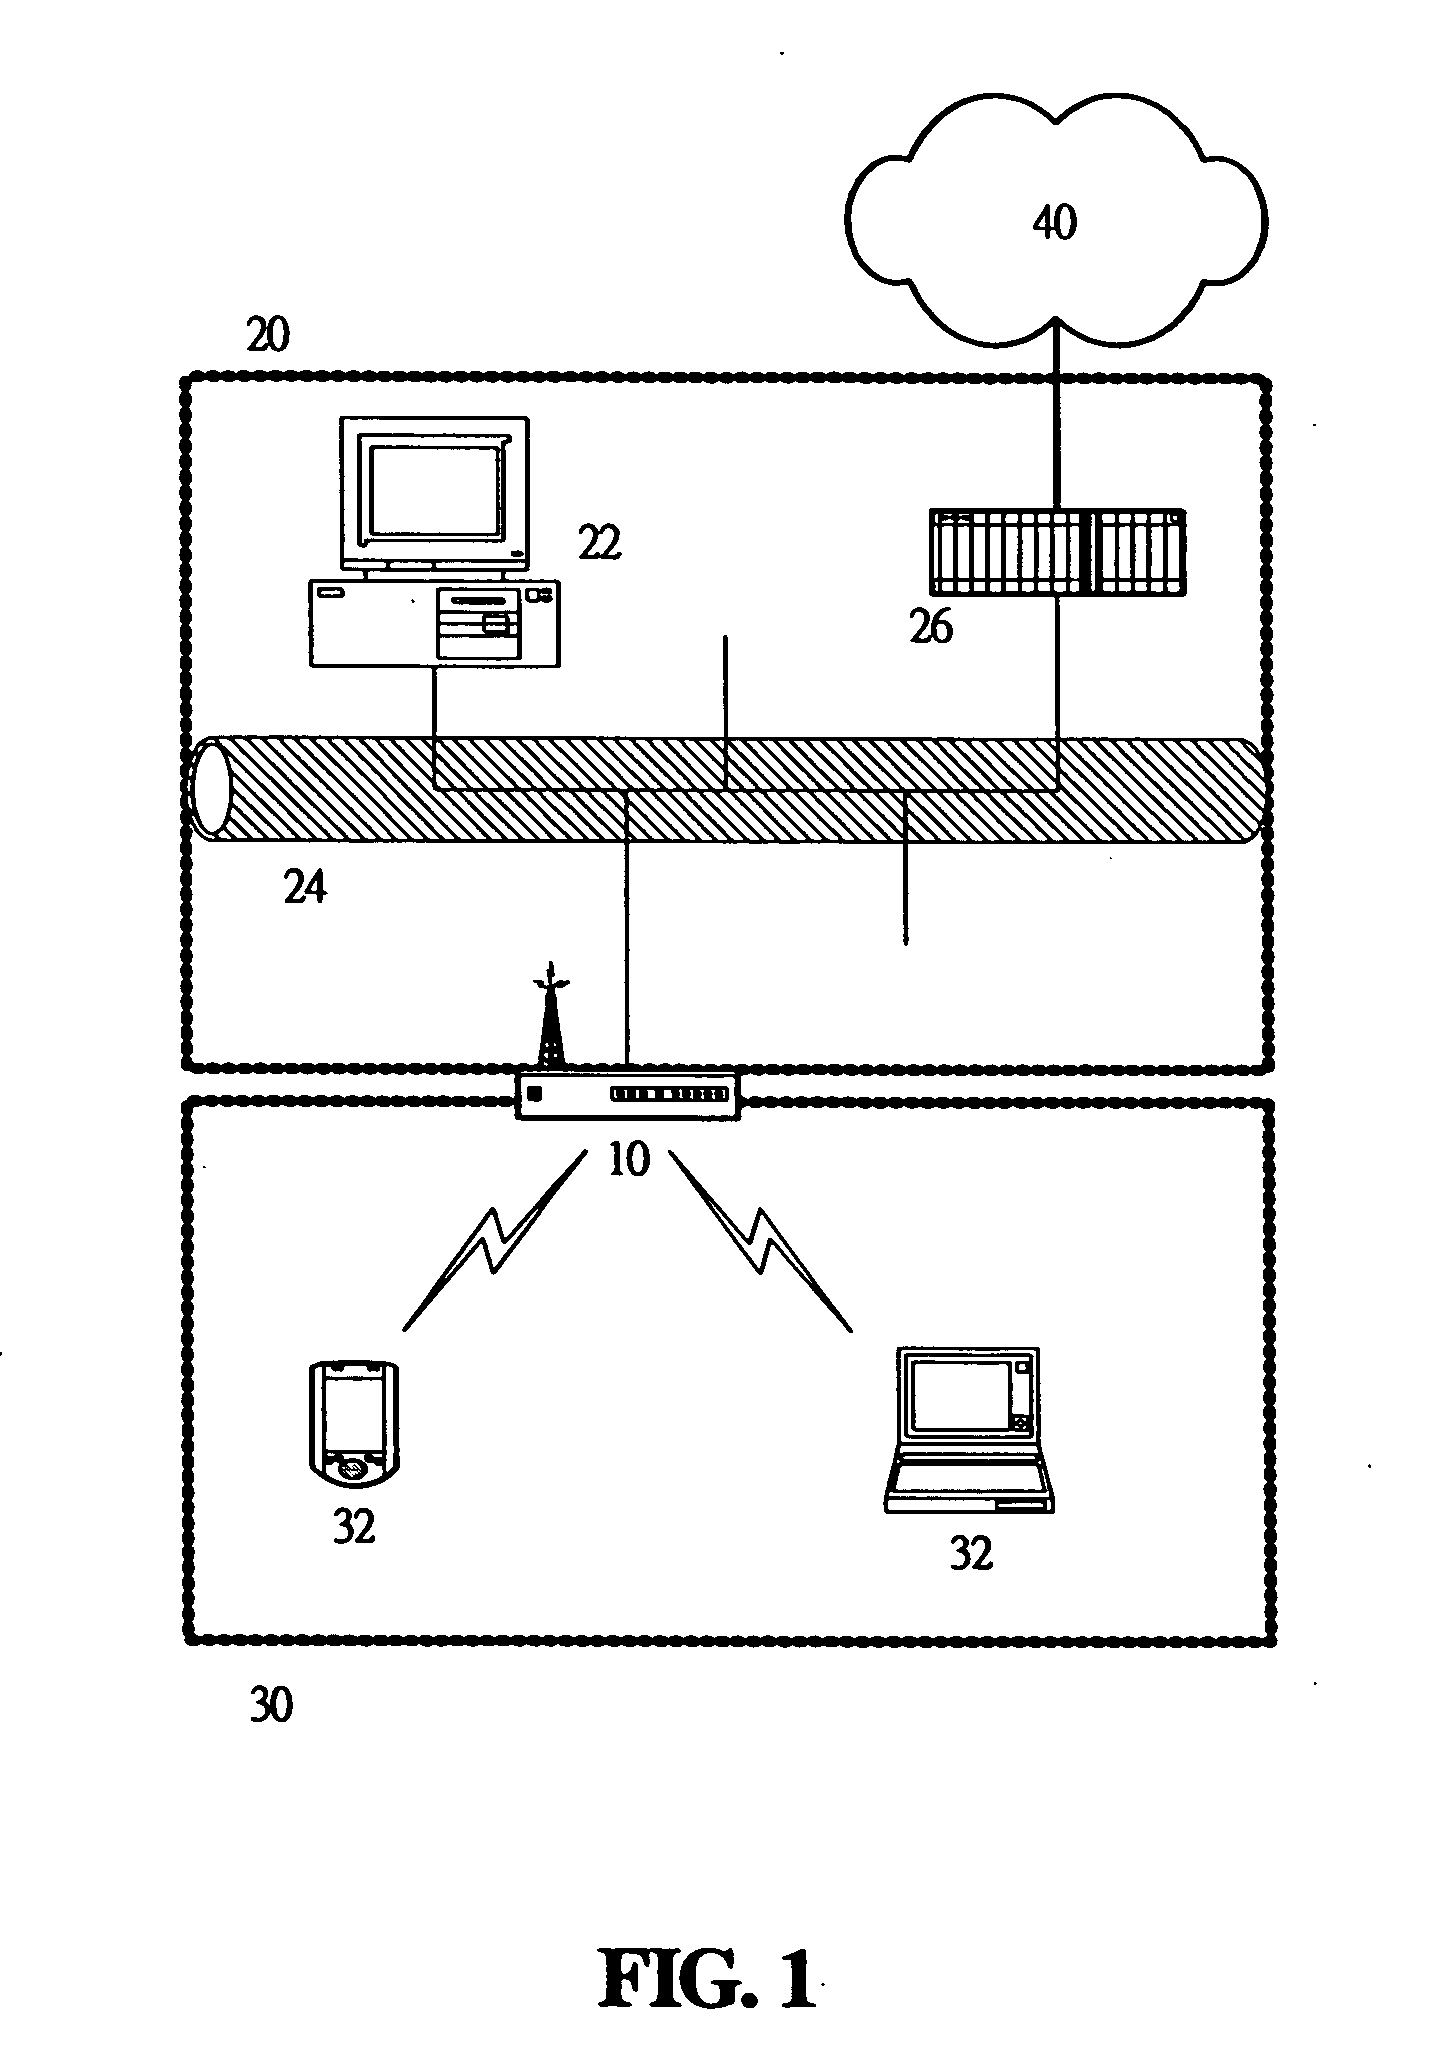 Method of configuring wireless device